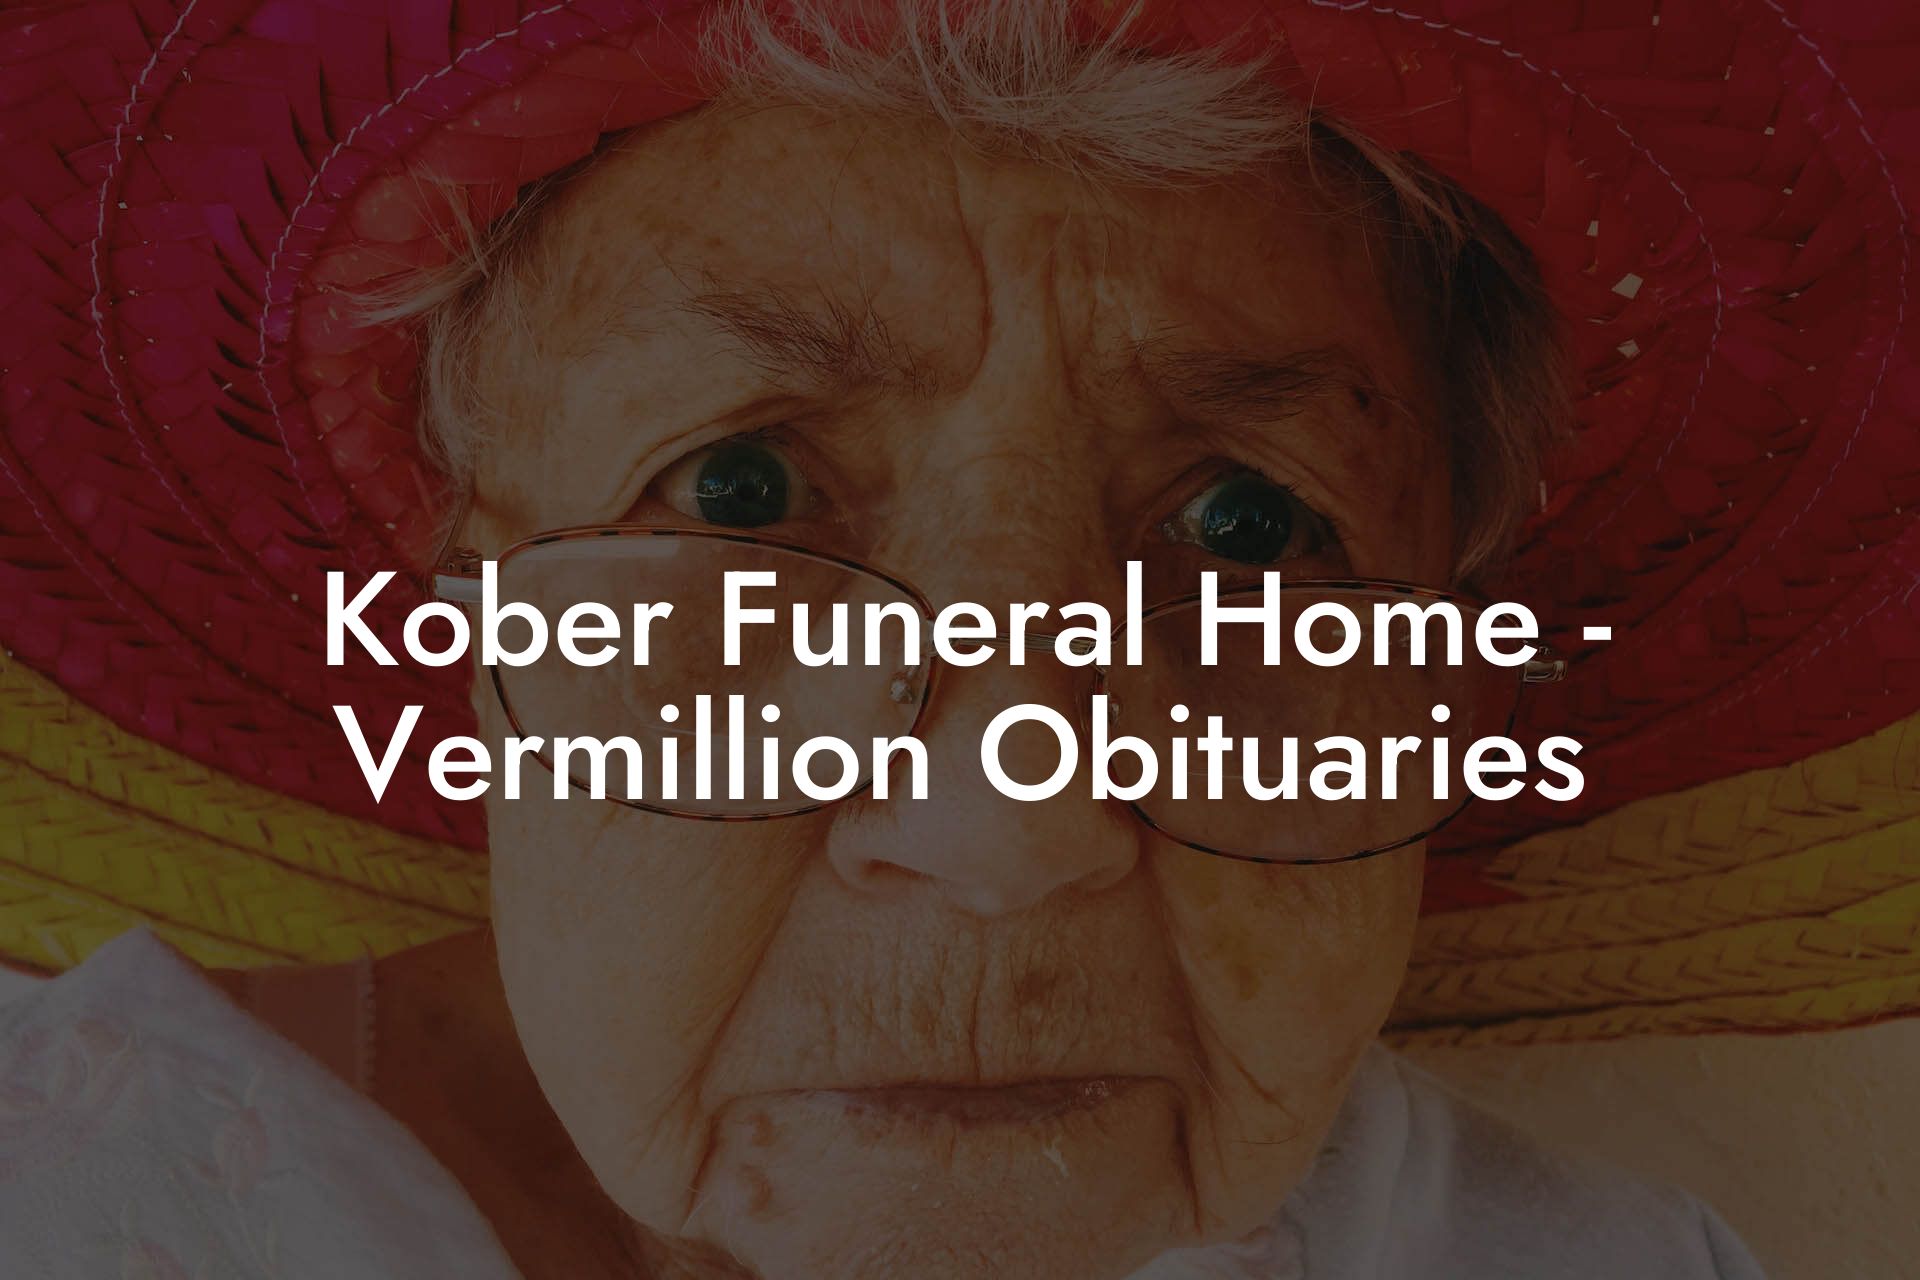 Kober Funeral Home - Vermillion Obituaries